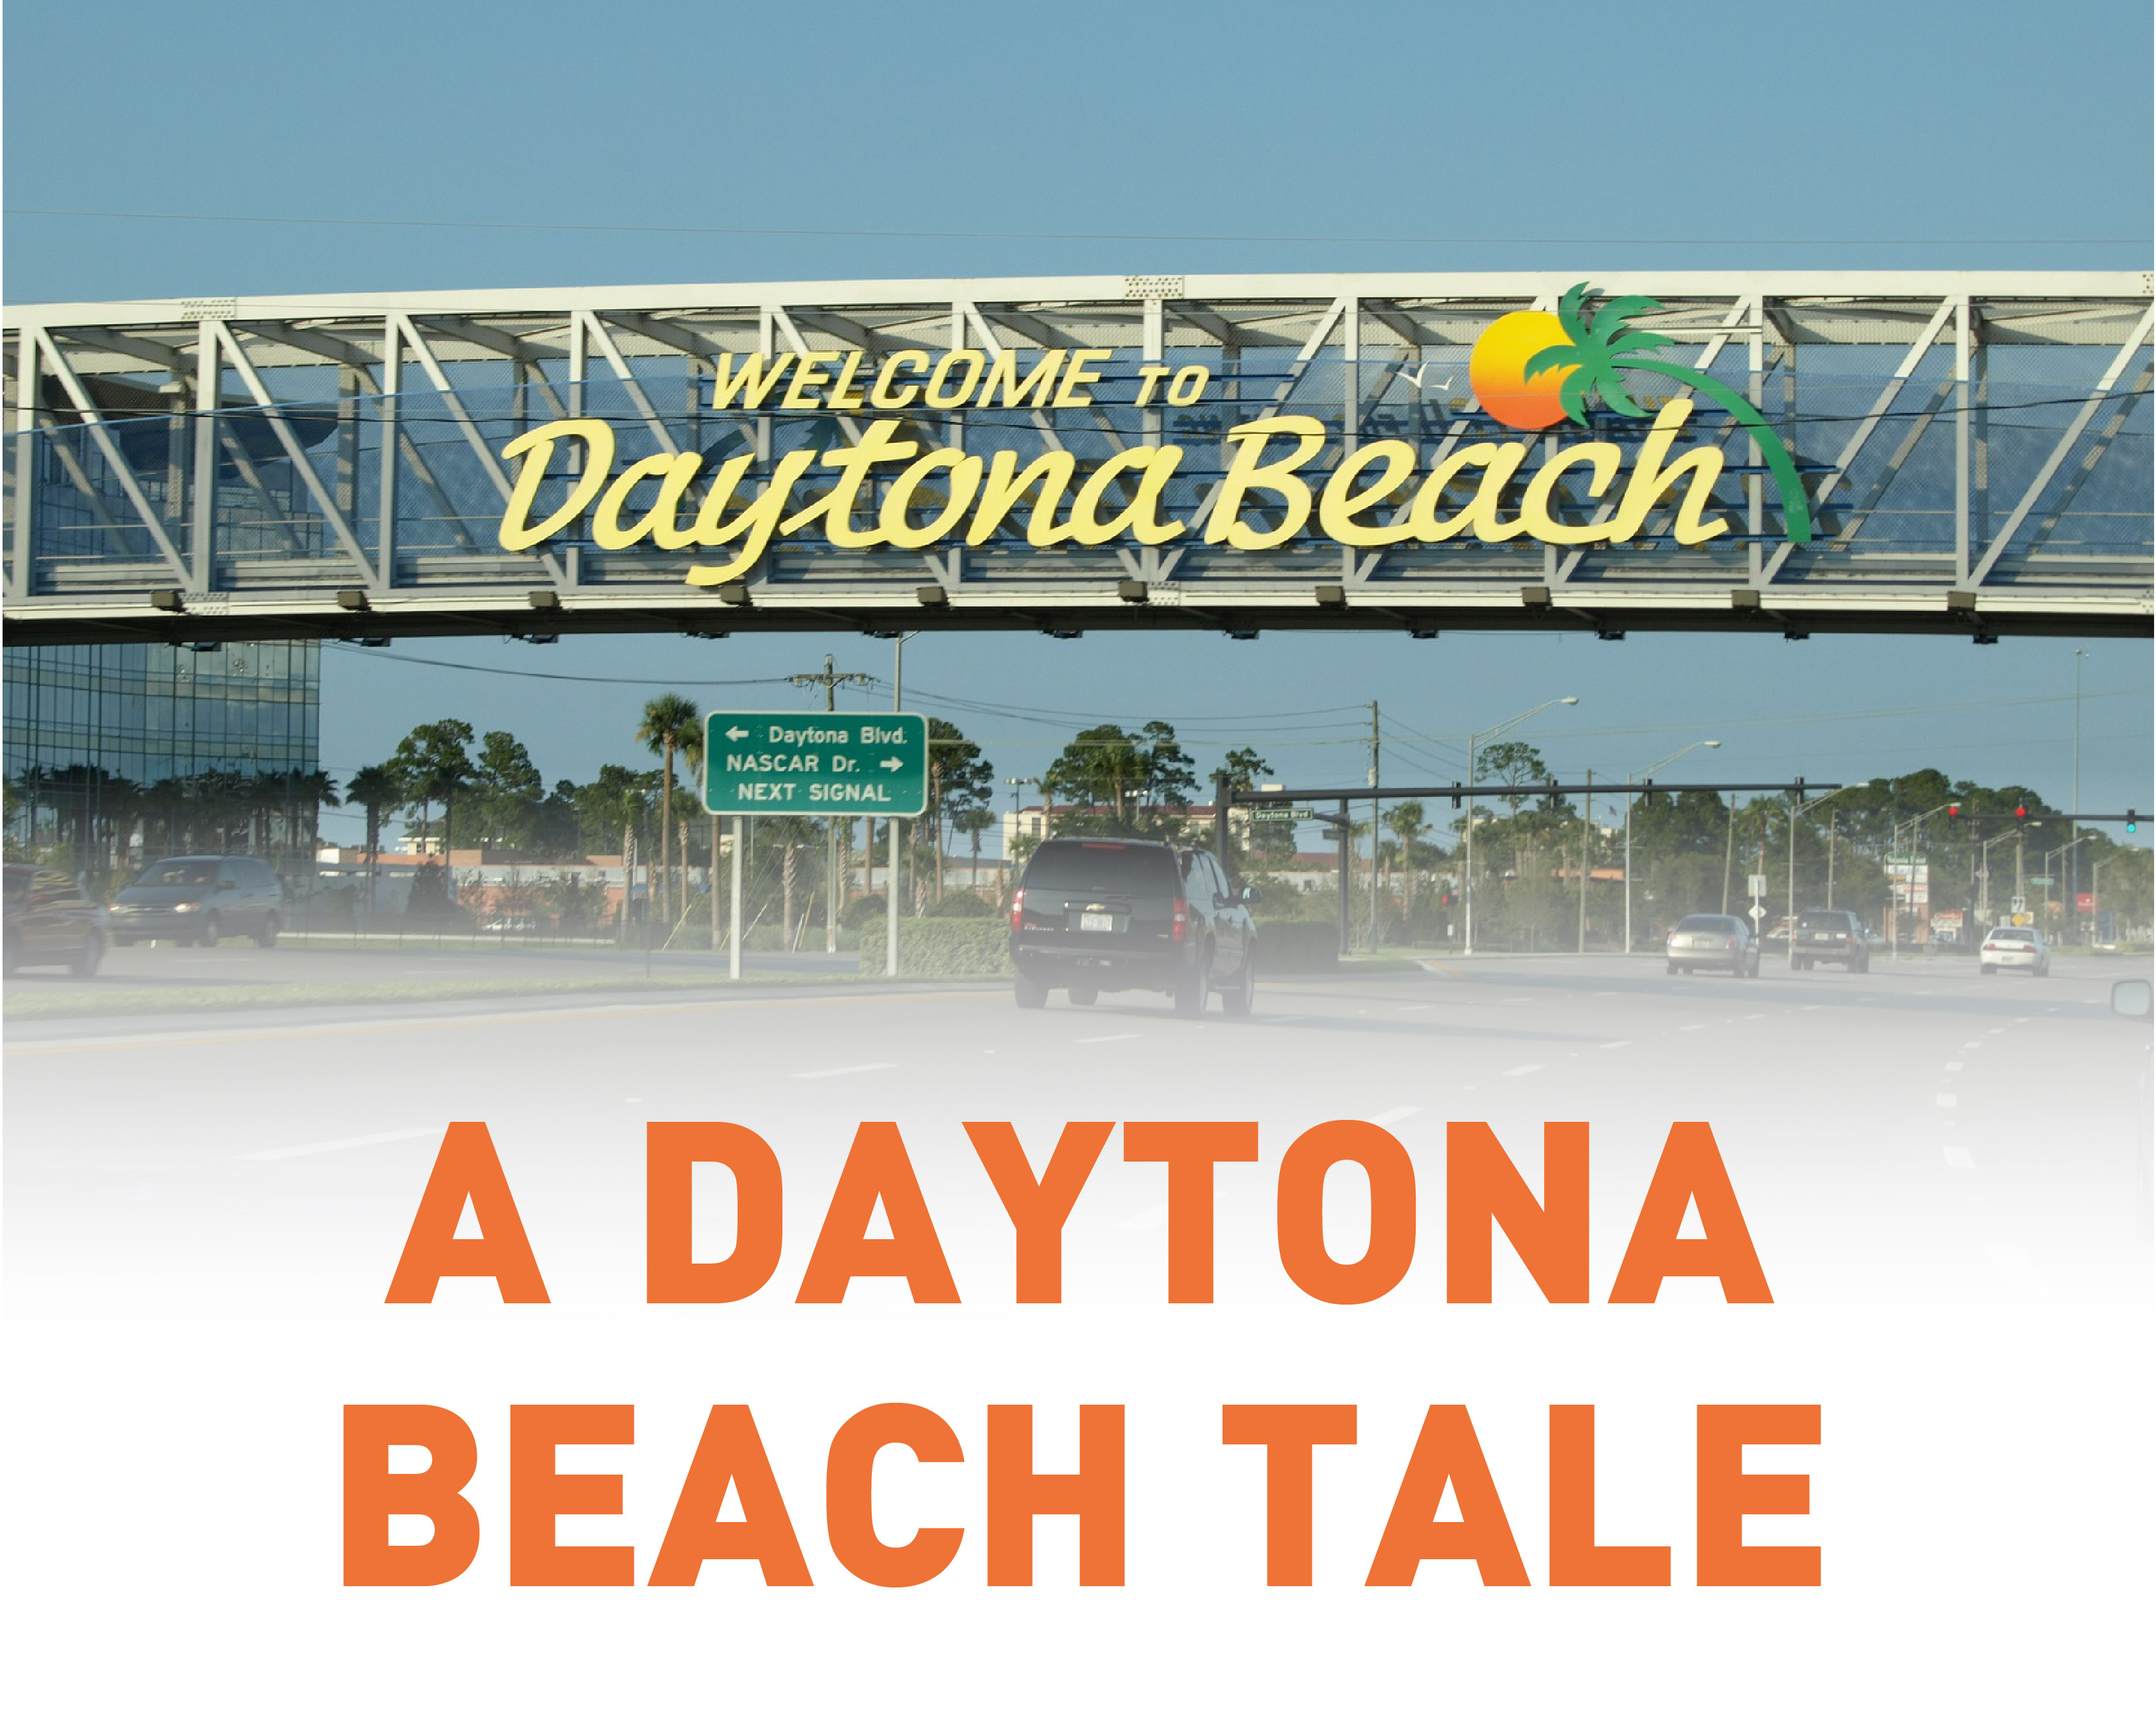 A Daytona Beach Tale